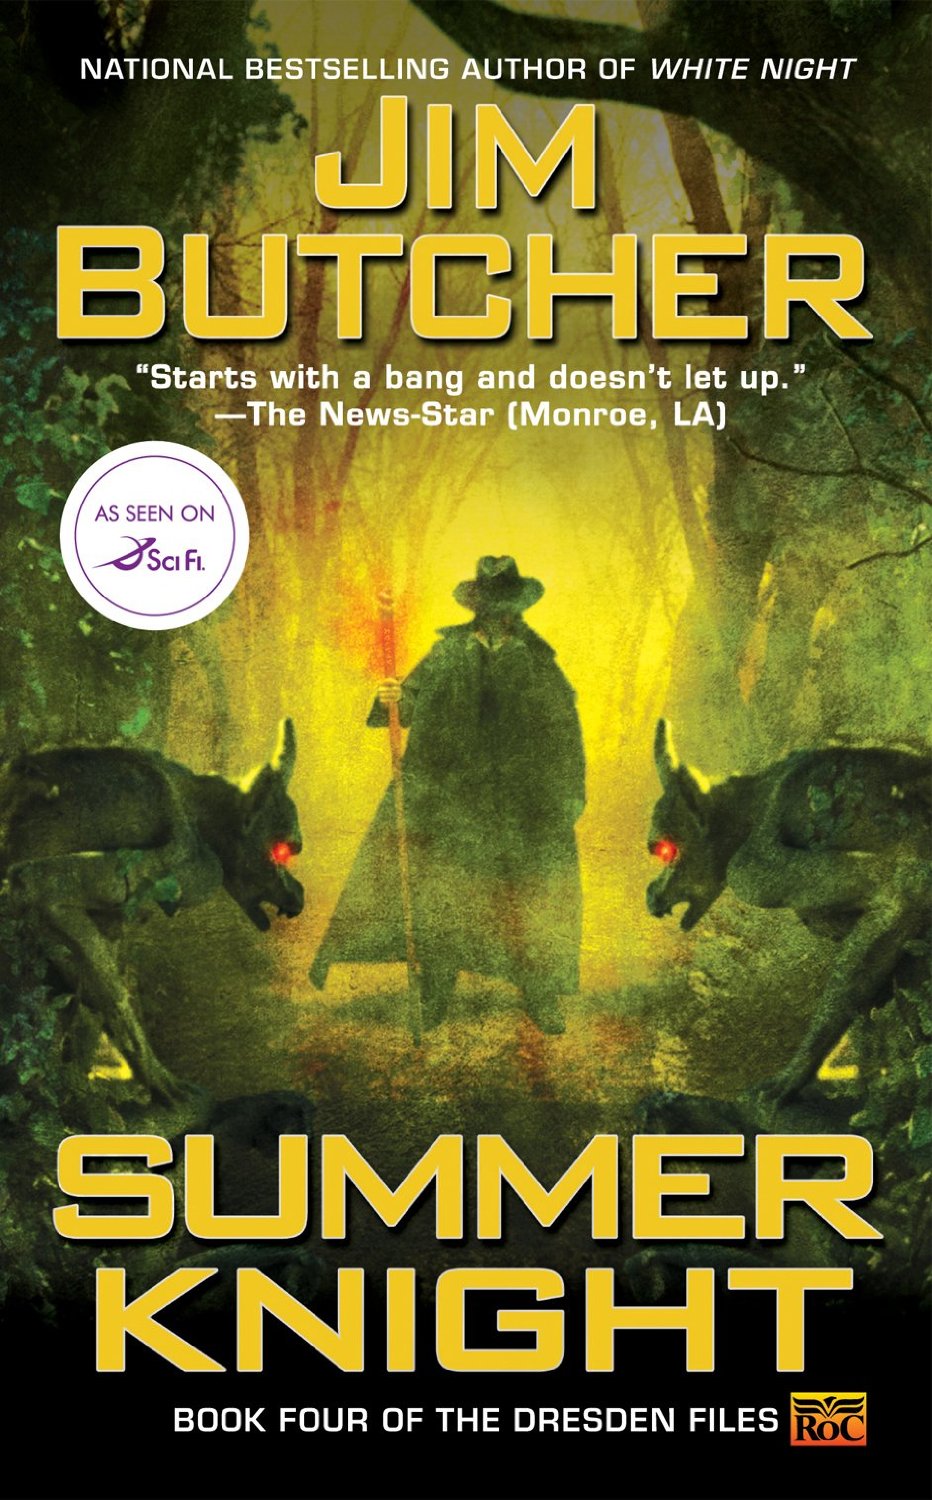 Review: Jim Butcher